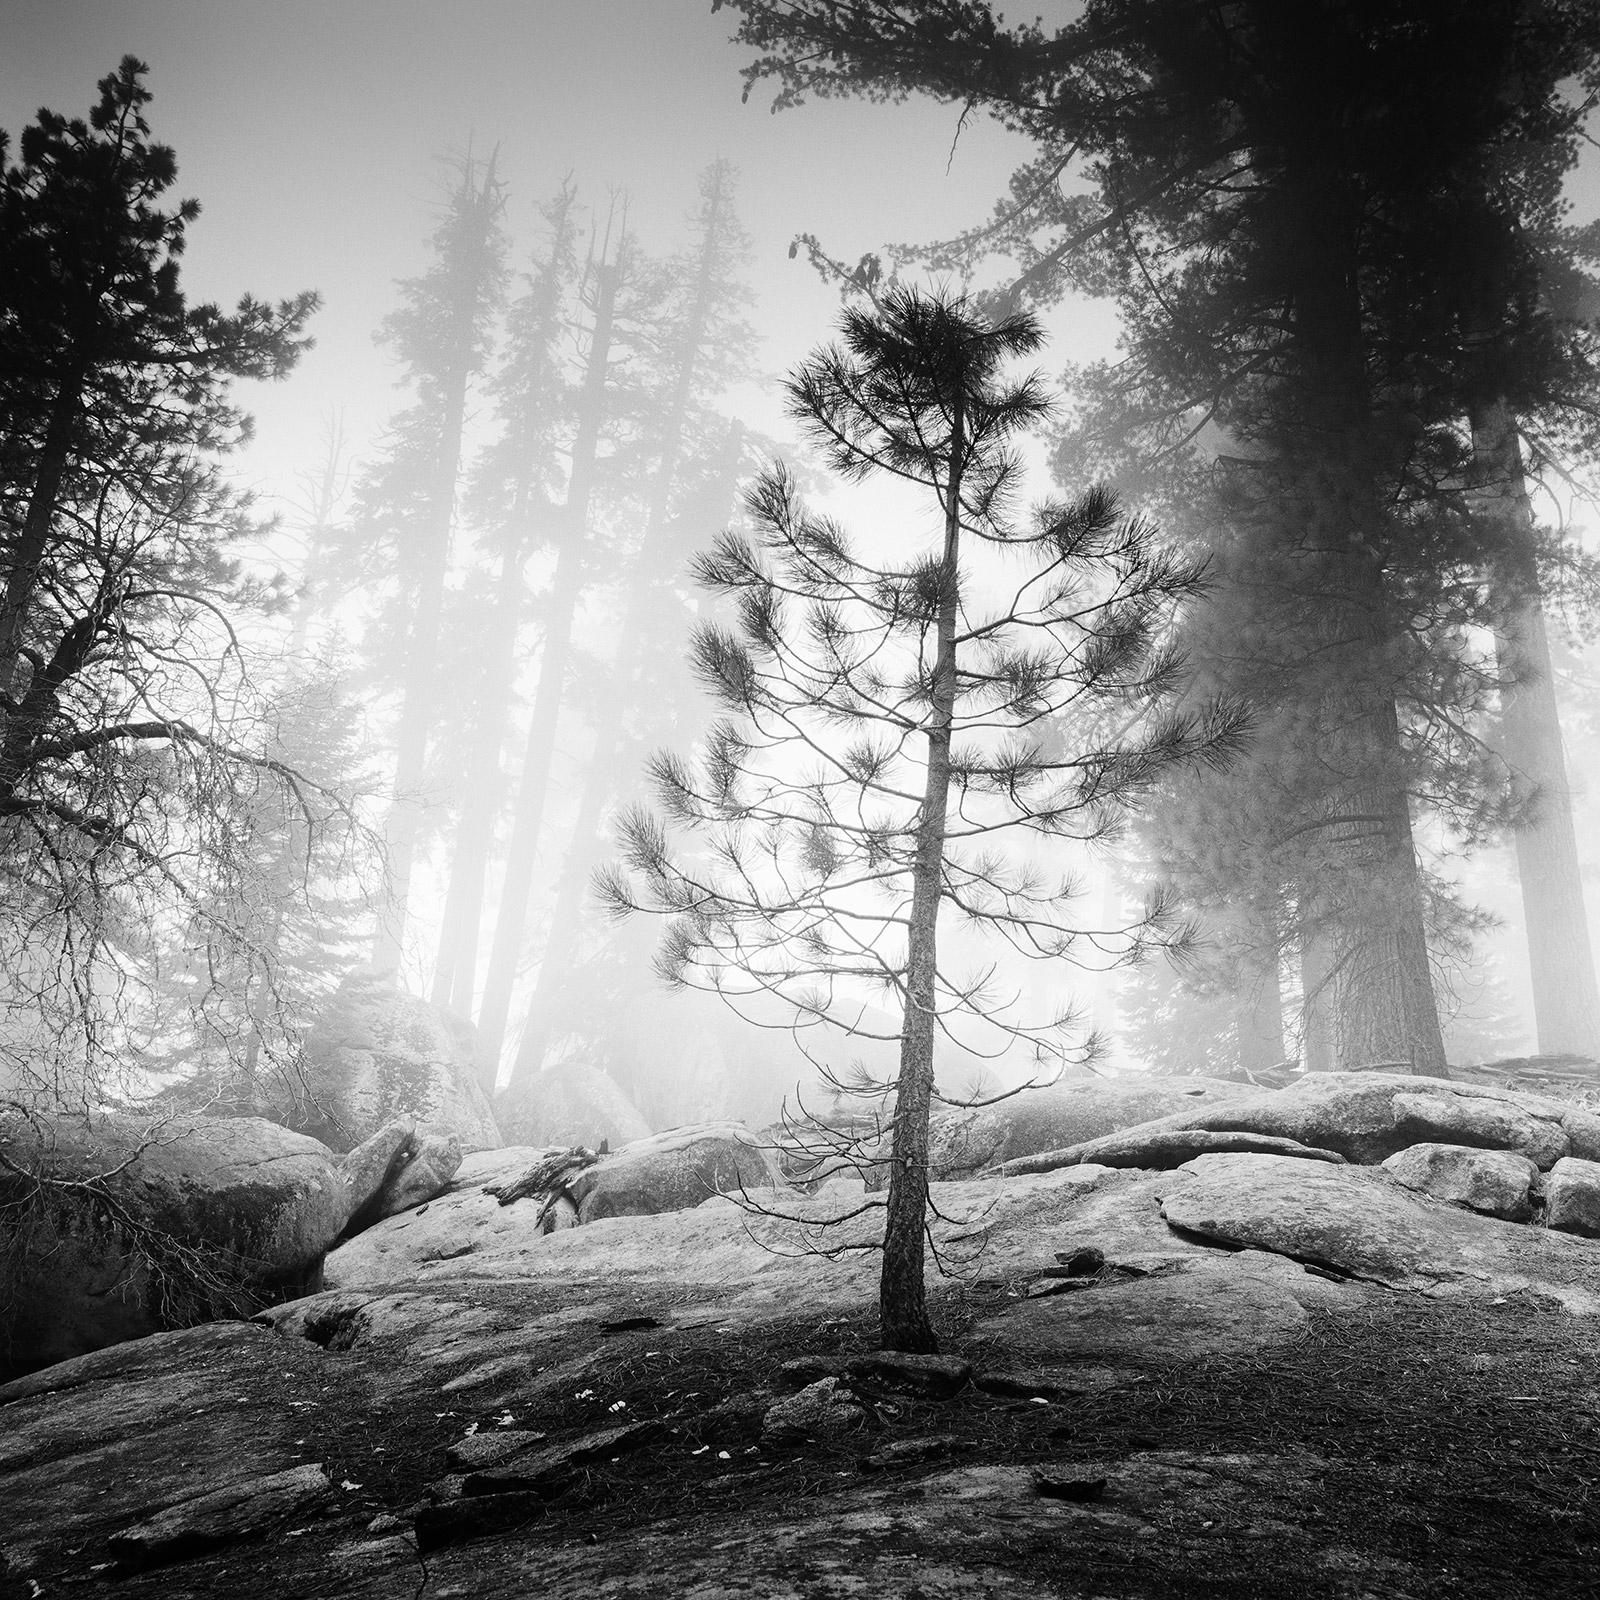 Into the Wild, Redwood, foggy, California, USA, b&w art landscape photography